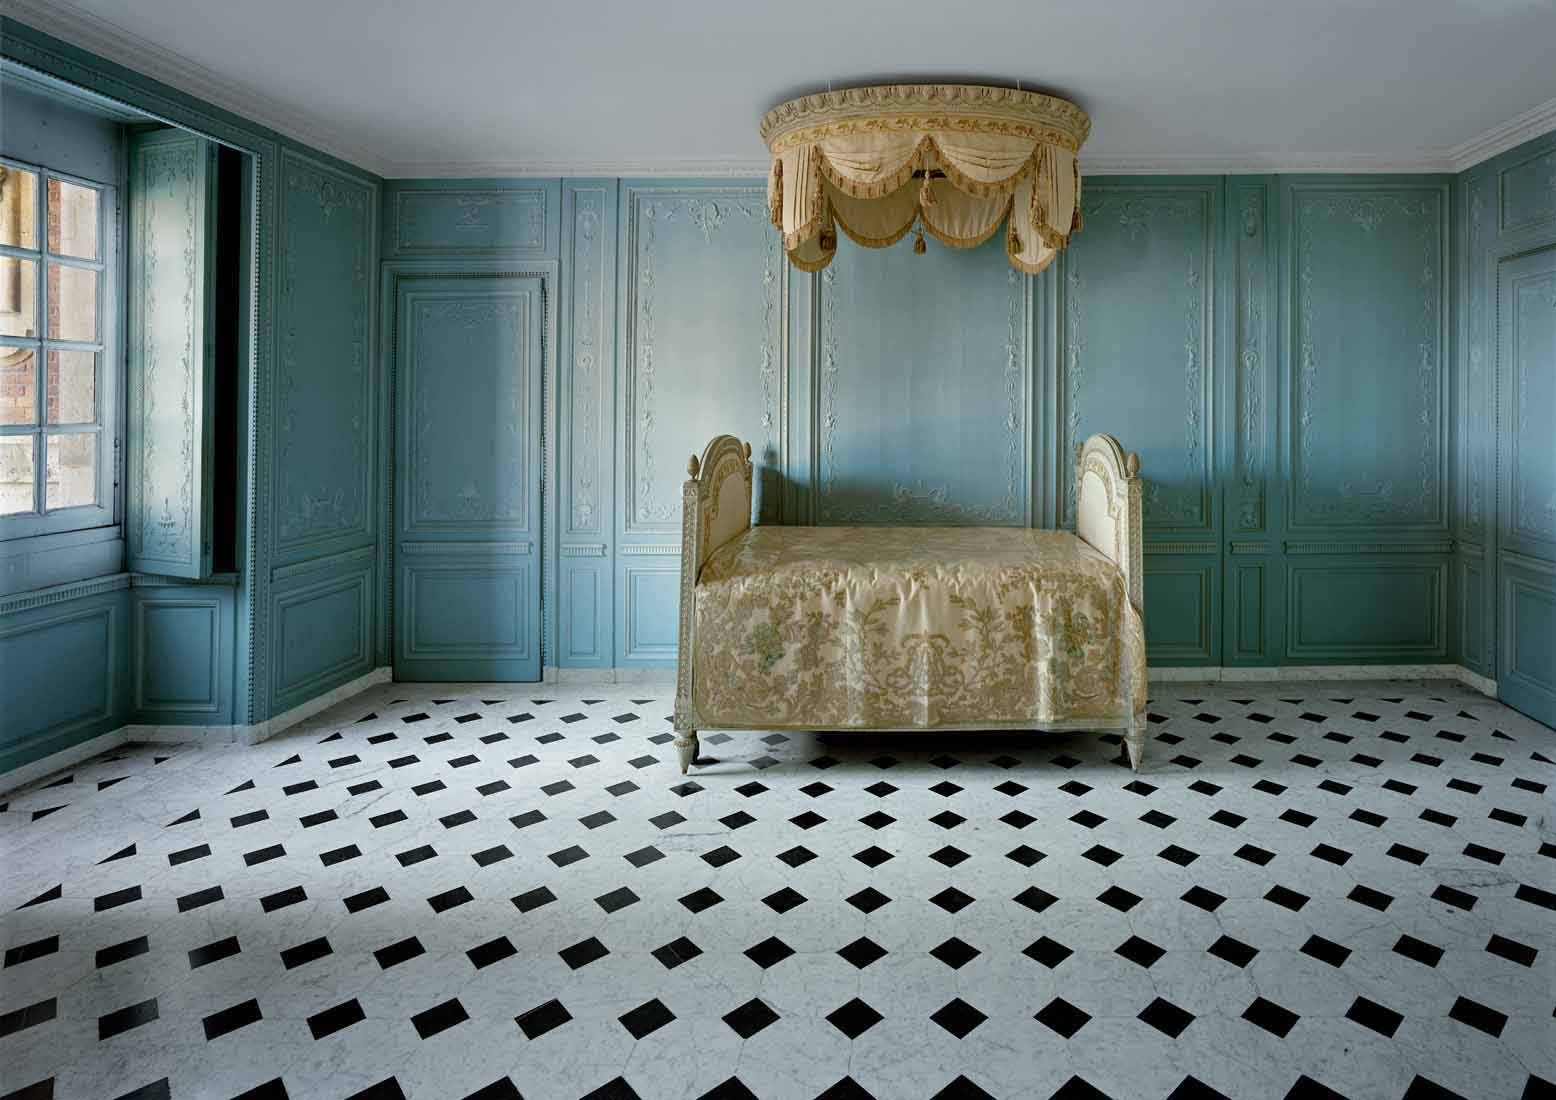 Robert Polidori, Salle de Bain de Marie-Antoinette, (33B)CCE.01.038, Corps Central, RdC, Versailles, 2005